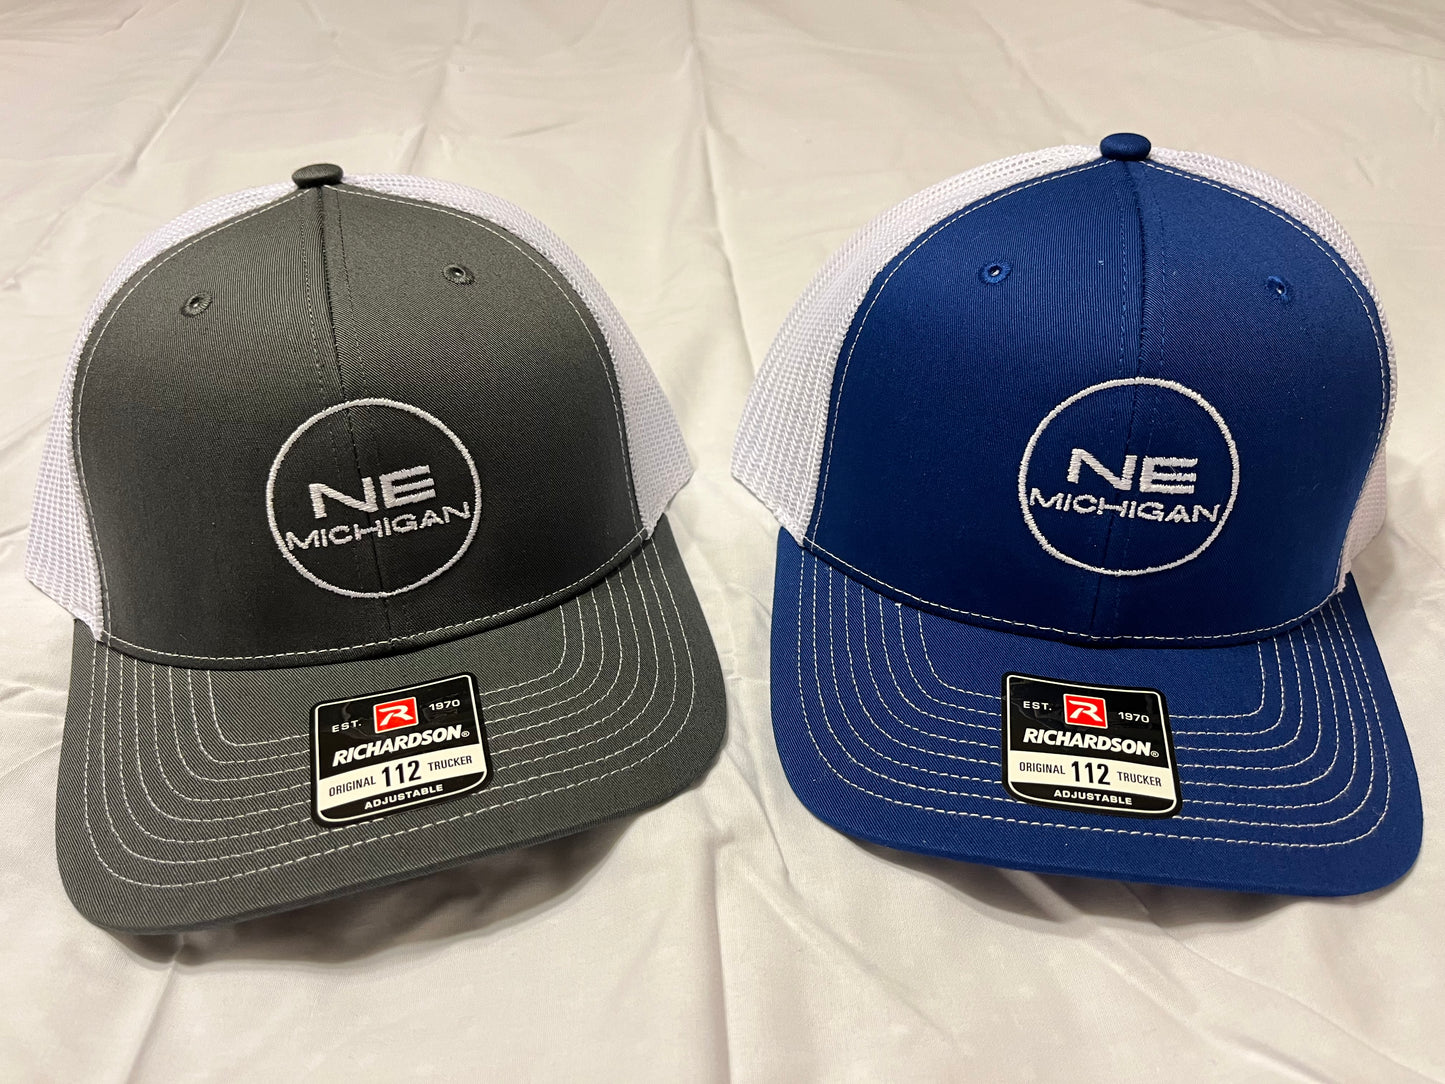 NE Michigan Trucker Hat: Charcoal